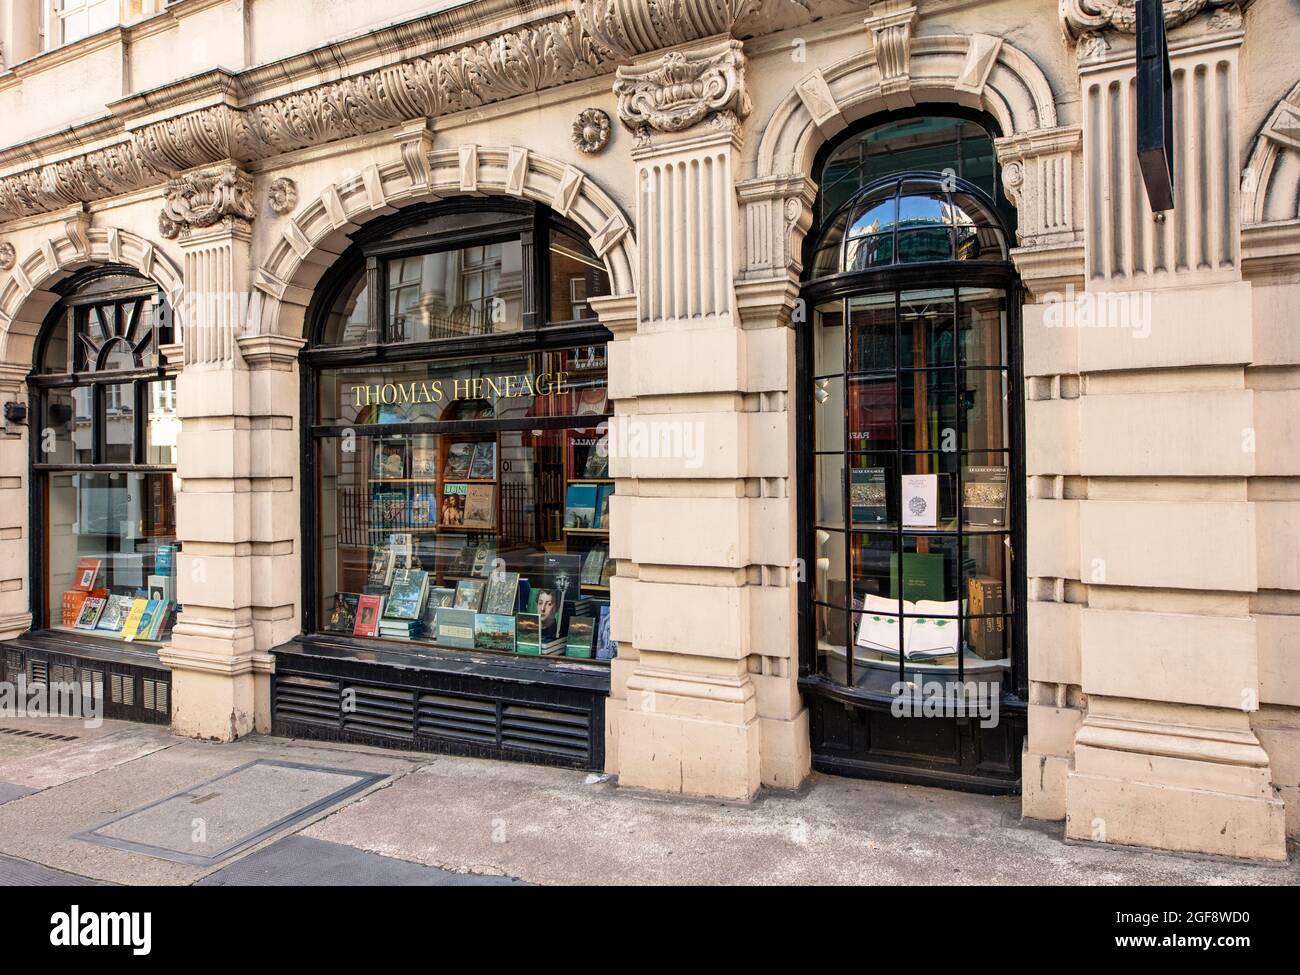 Thomas Heneage Art Books, ein gehobener Buchladen in 42 Duke St James's, London, Großbritannien Stockfoto